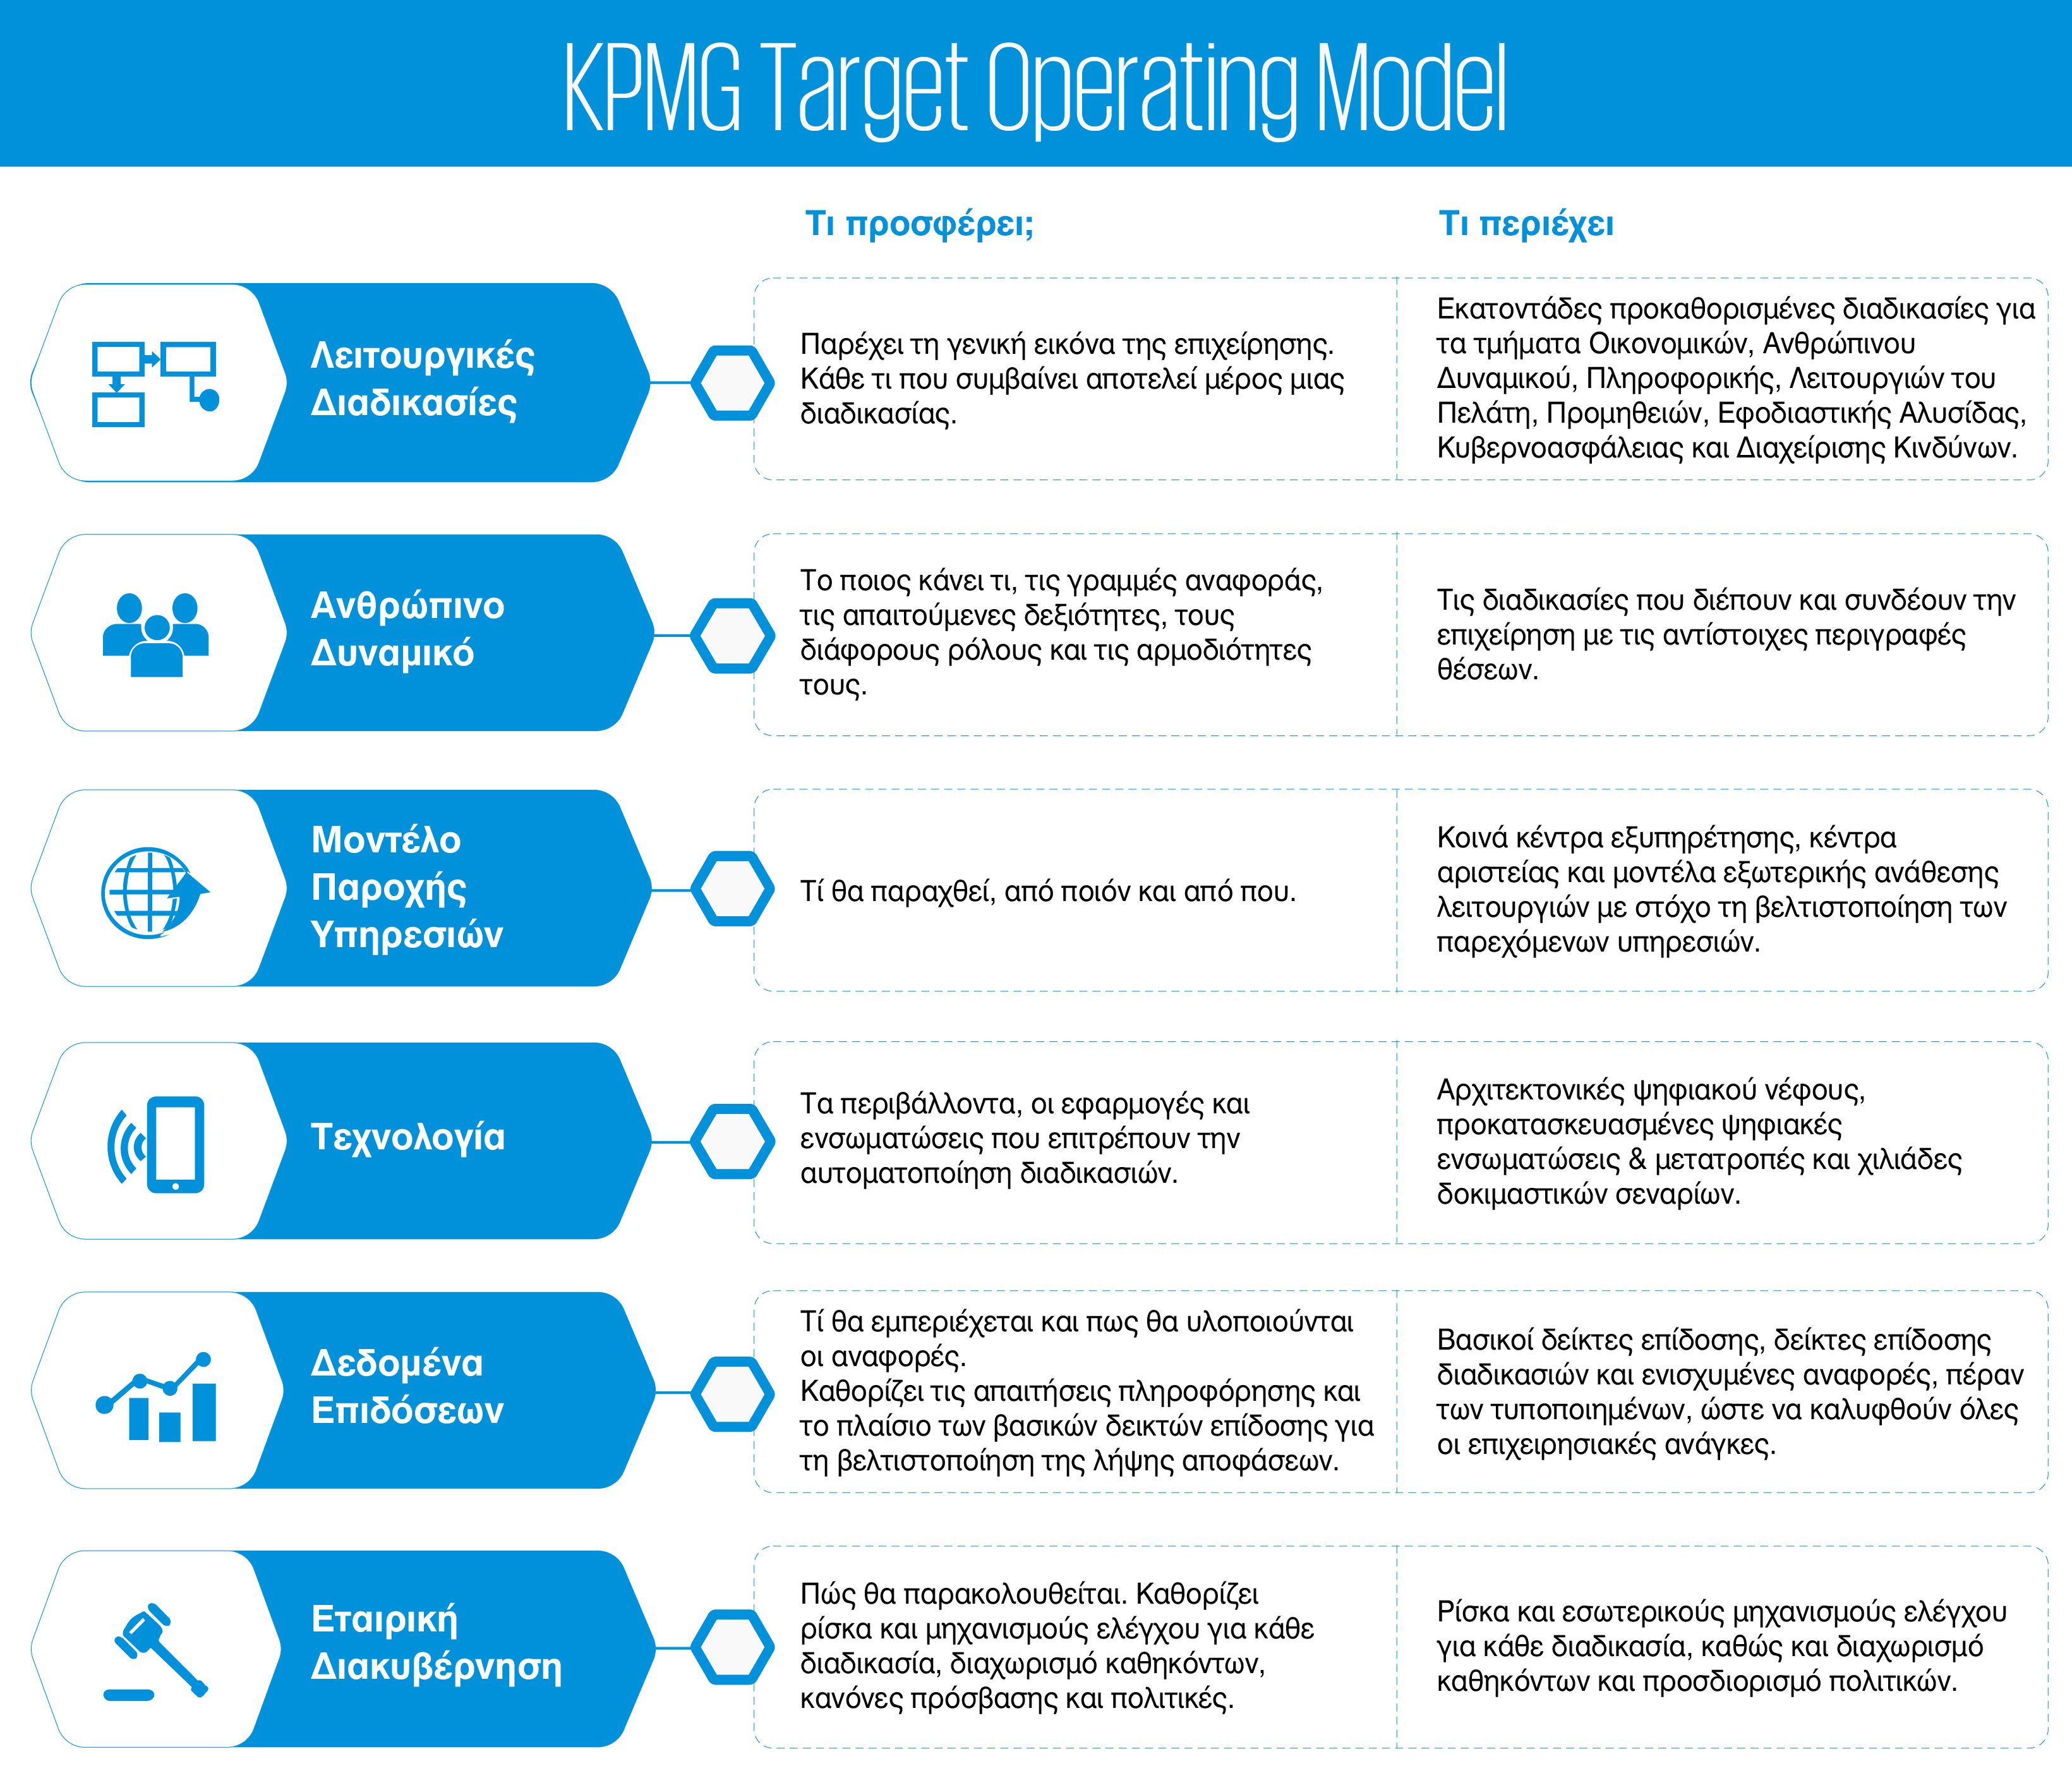 KPMG Target Operating Model, chart